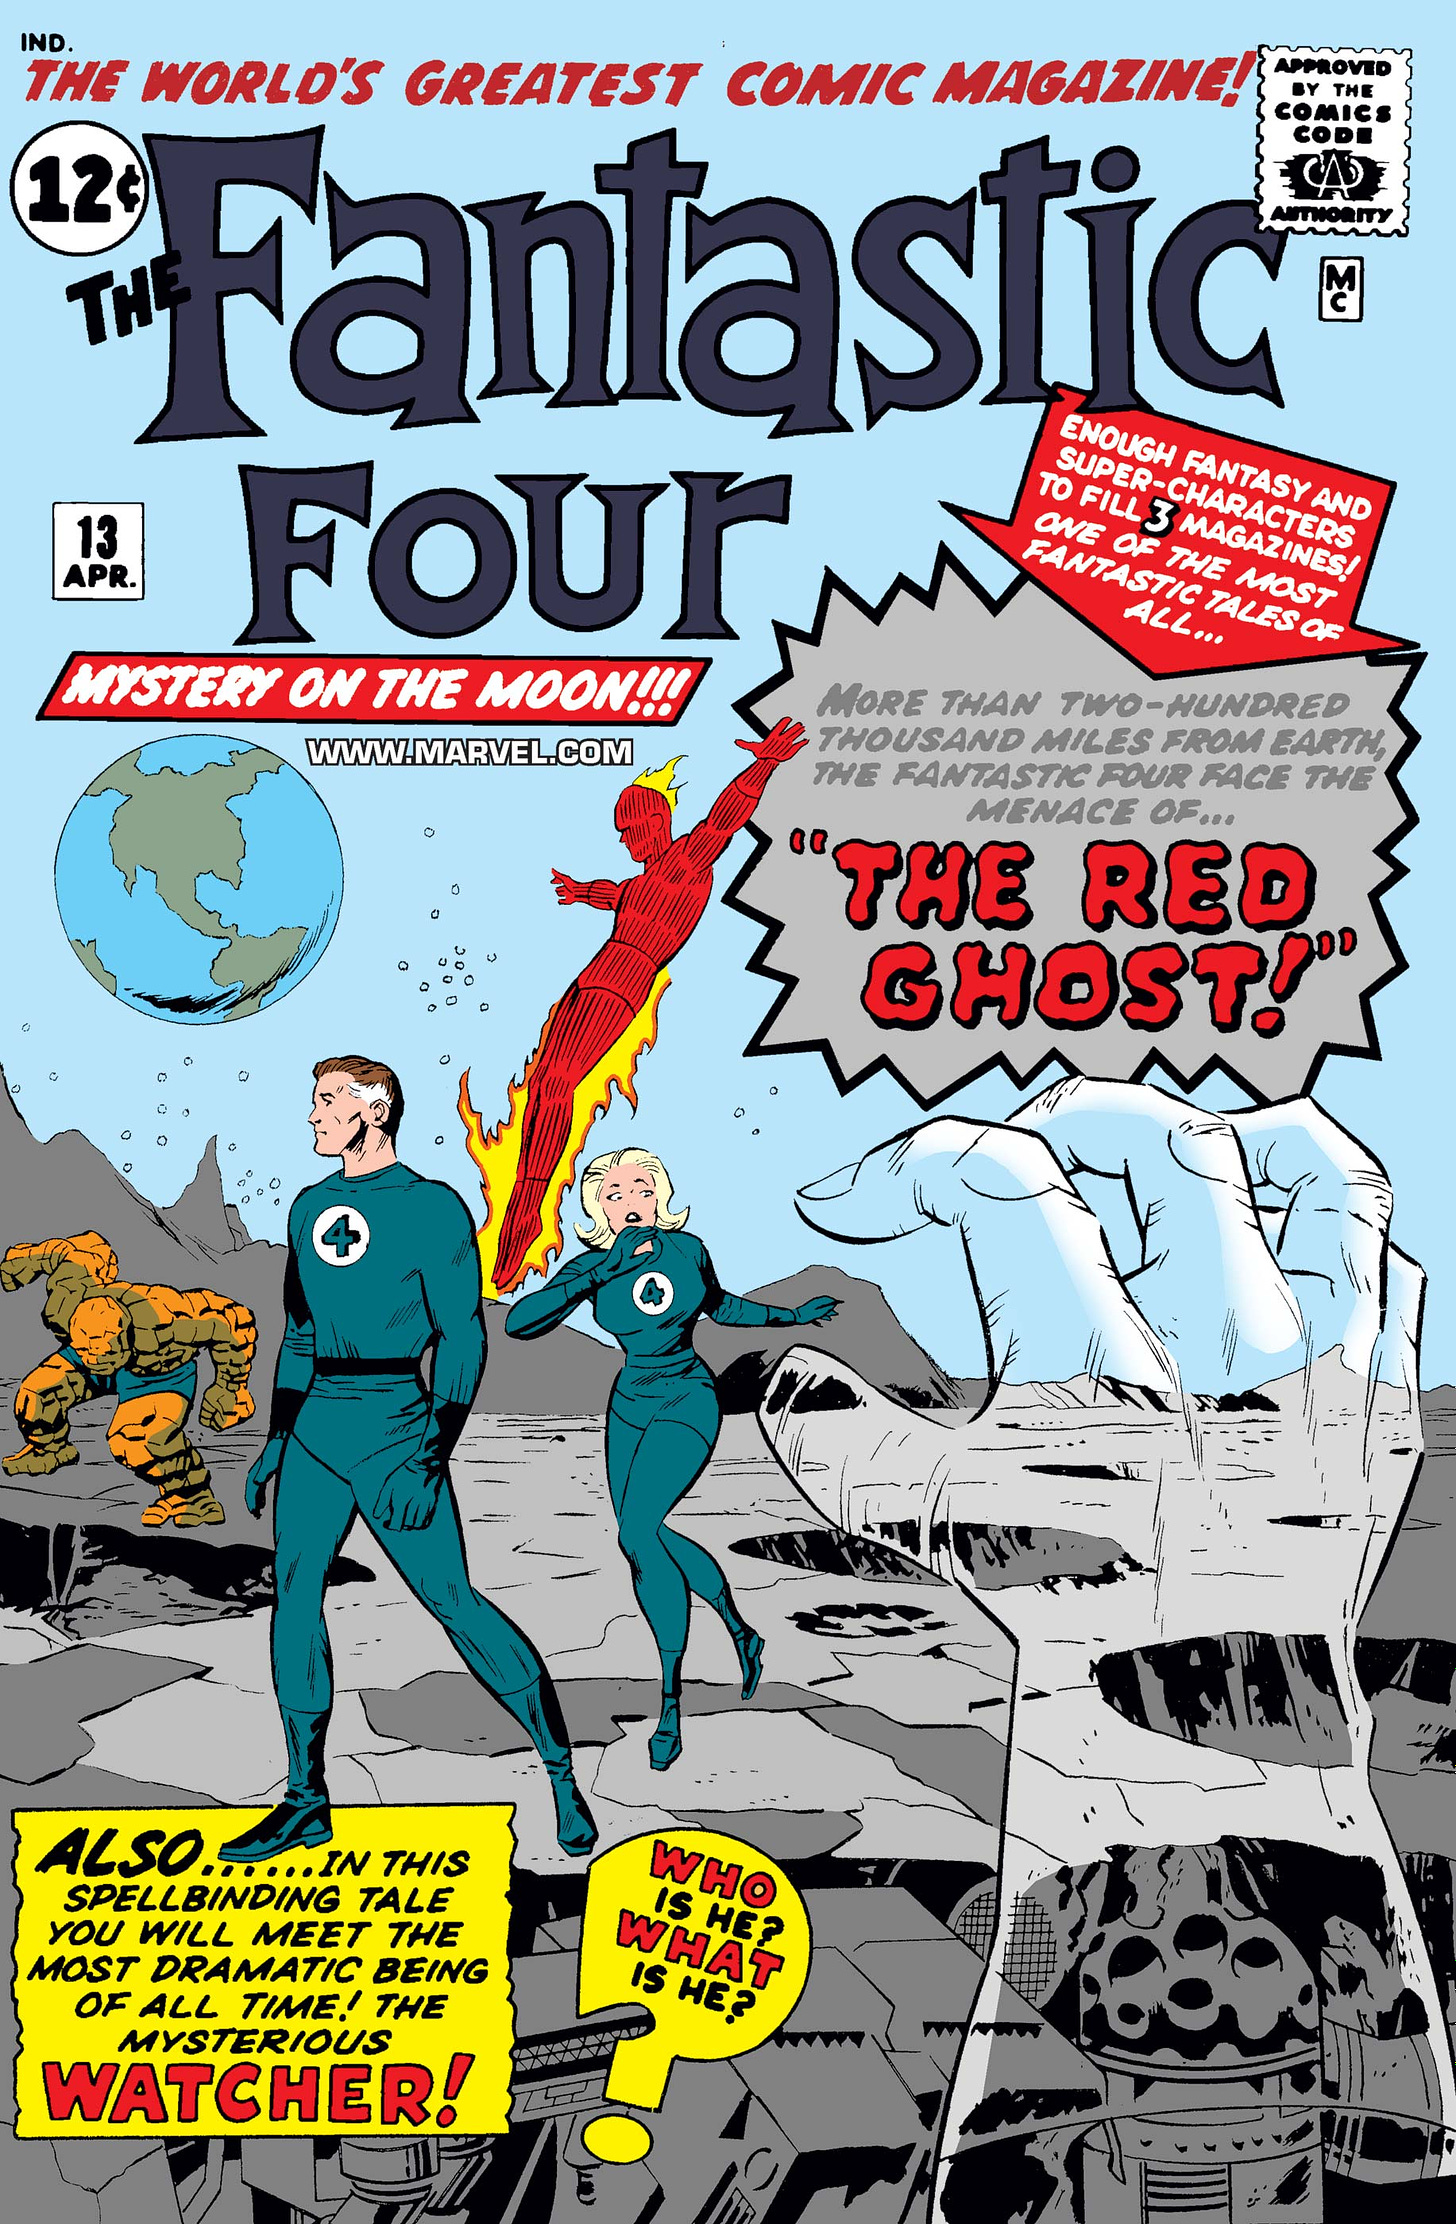 Fantastic Four (1961) #13 | Comic Issues | Marvel